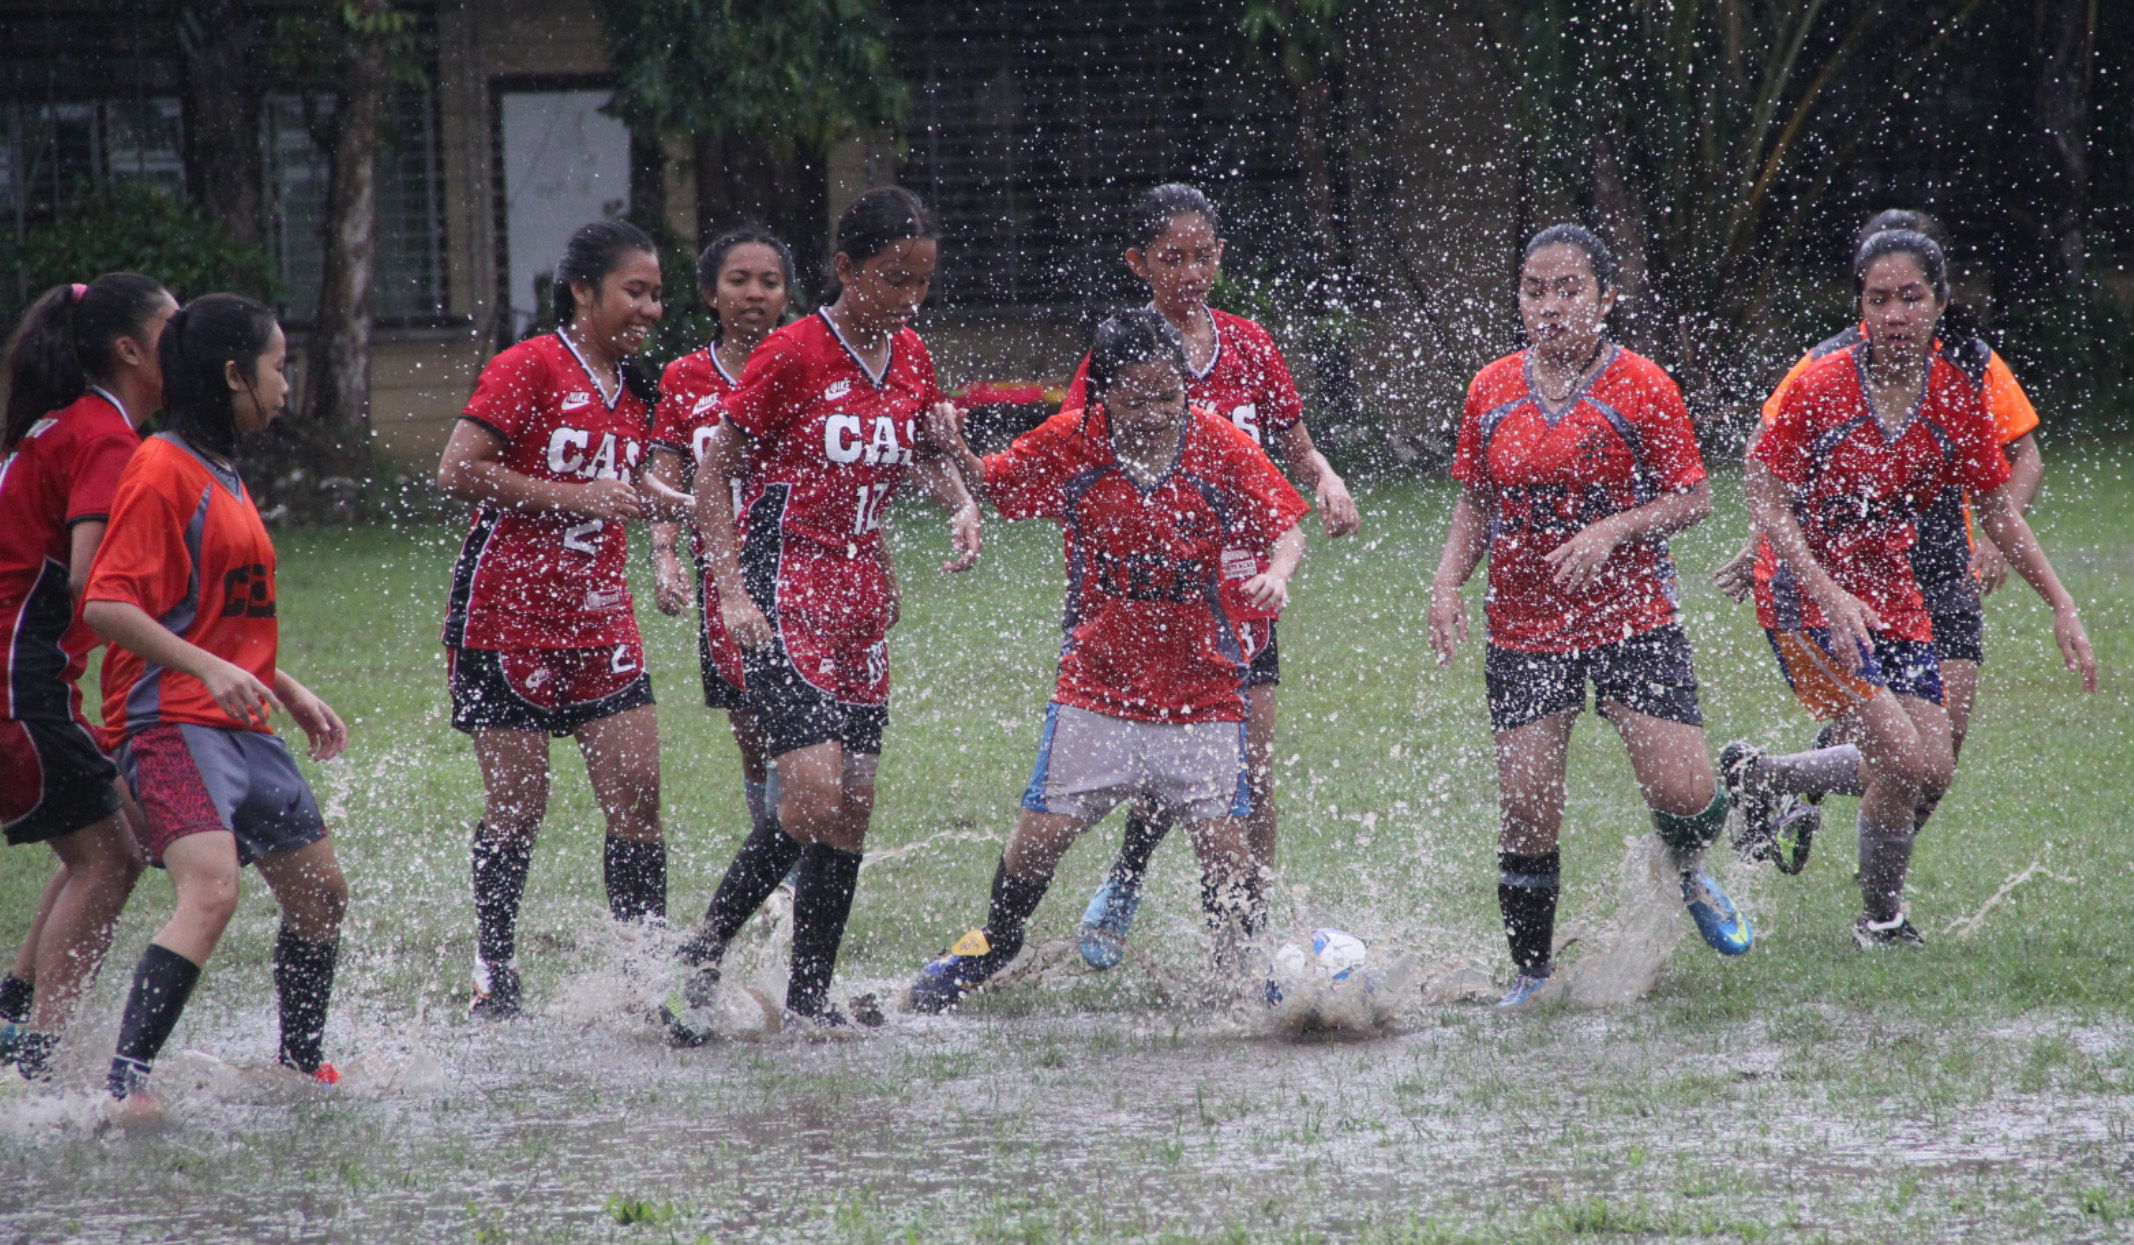 Football in the rain at ISAT U football field.